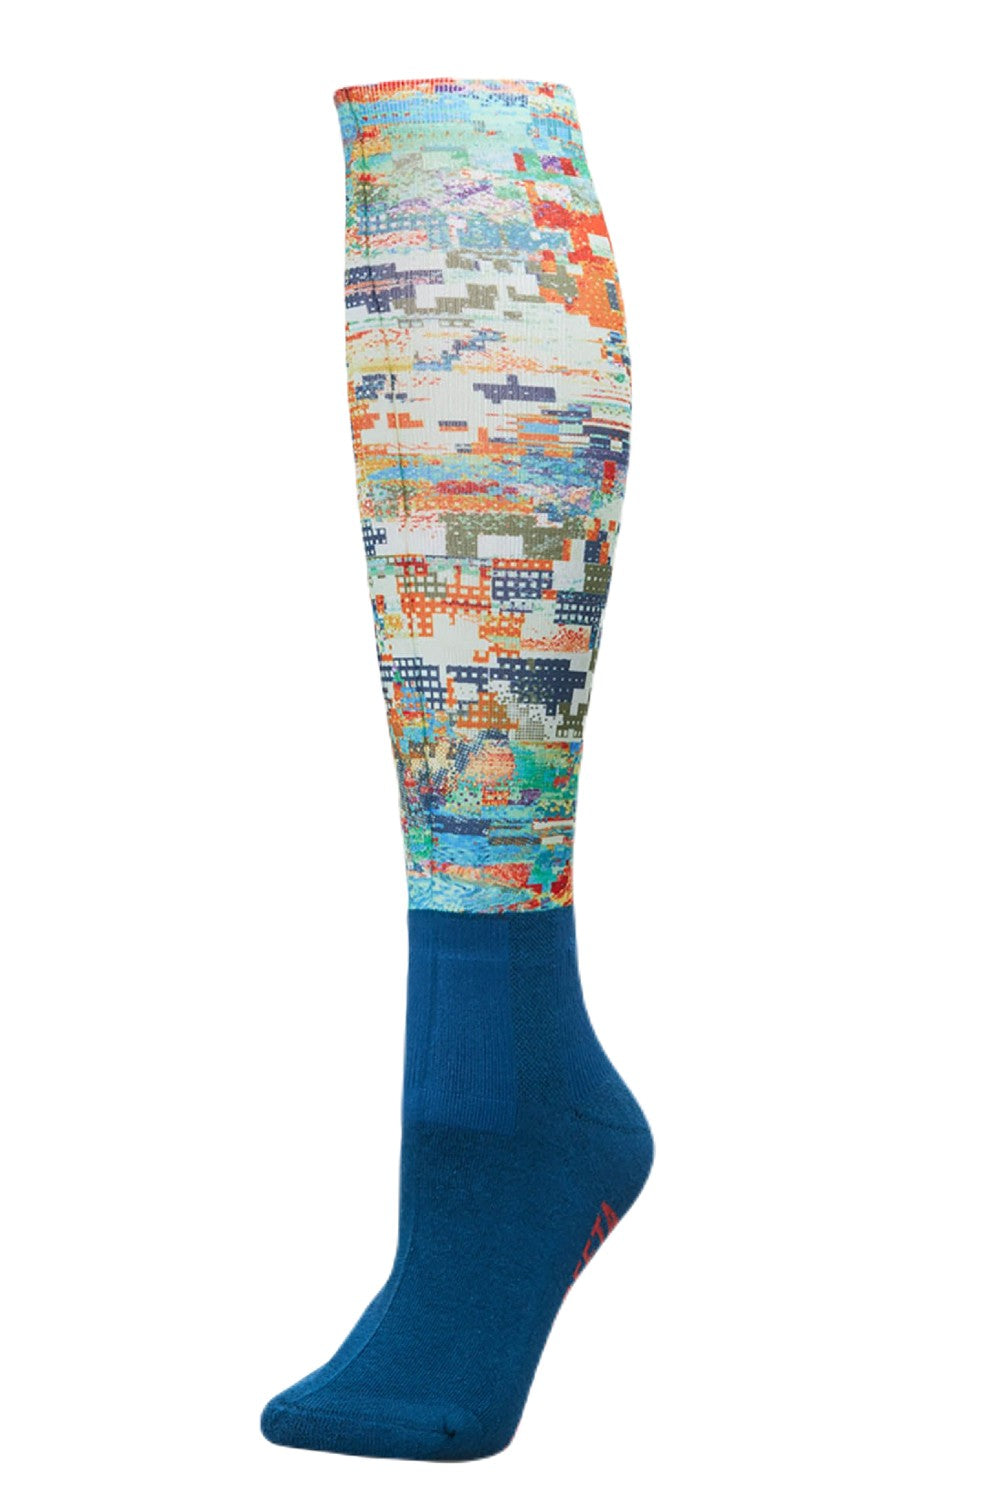 WeatherBeeta Stocking Socks In Tile Abstract  